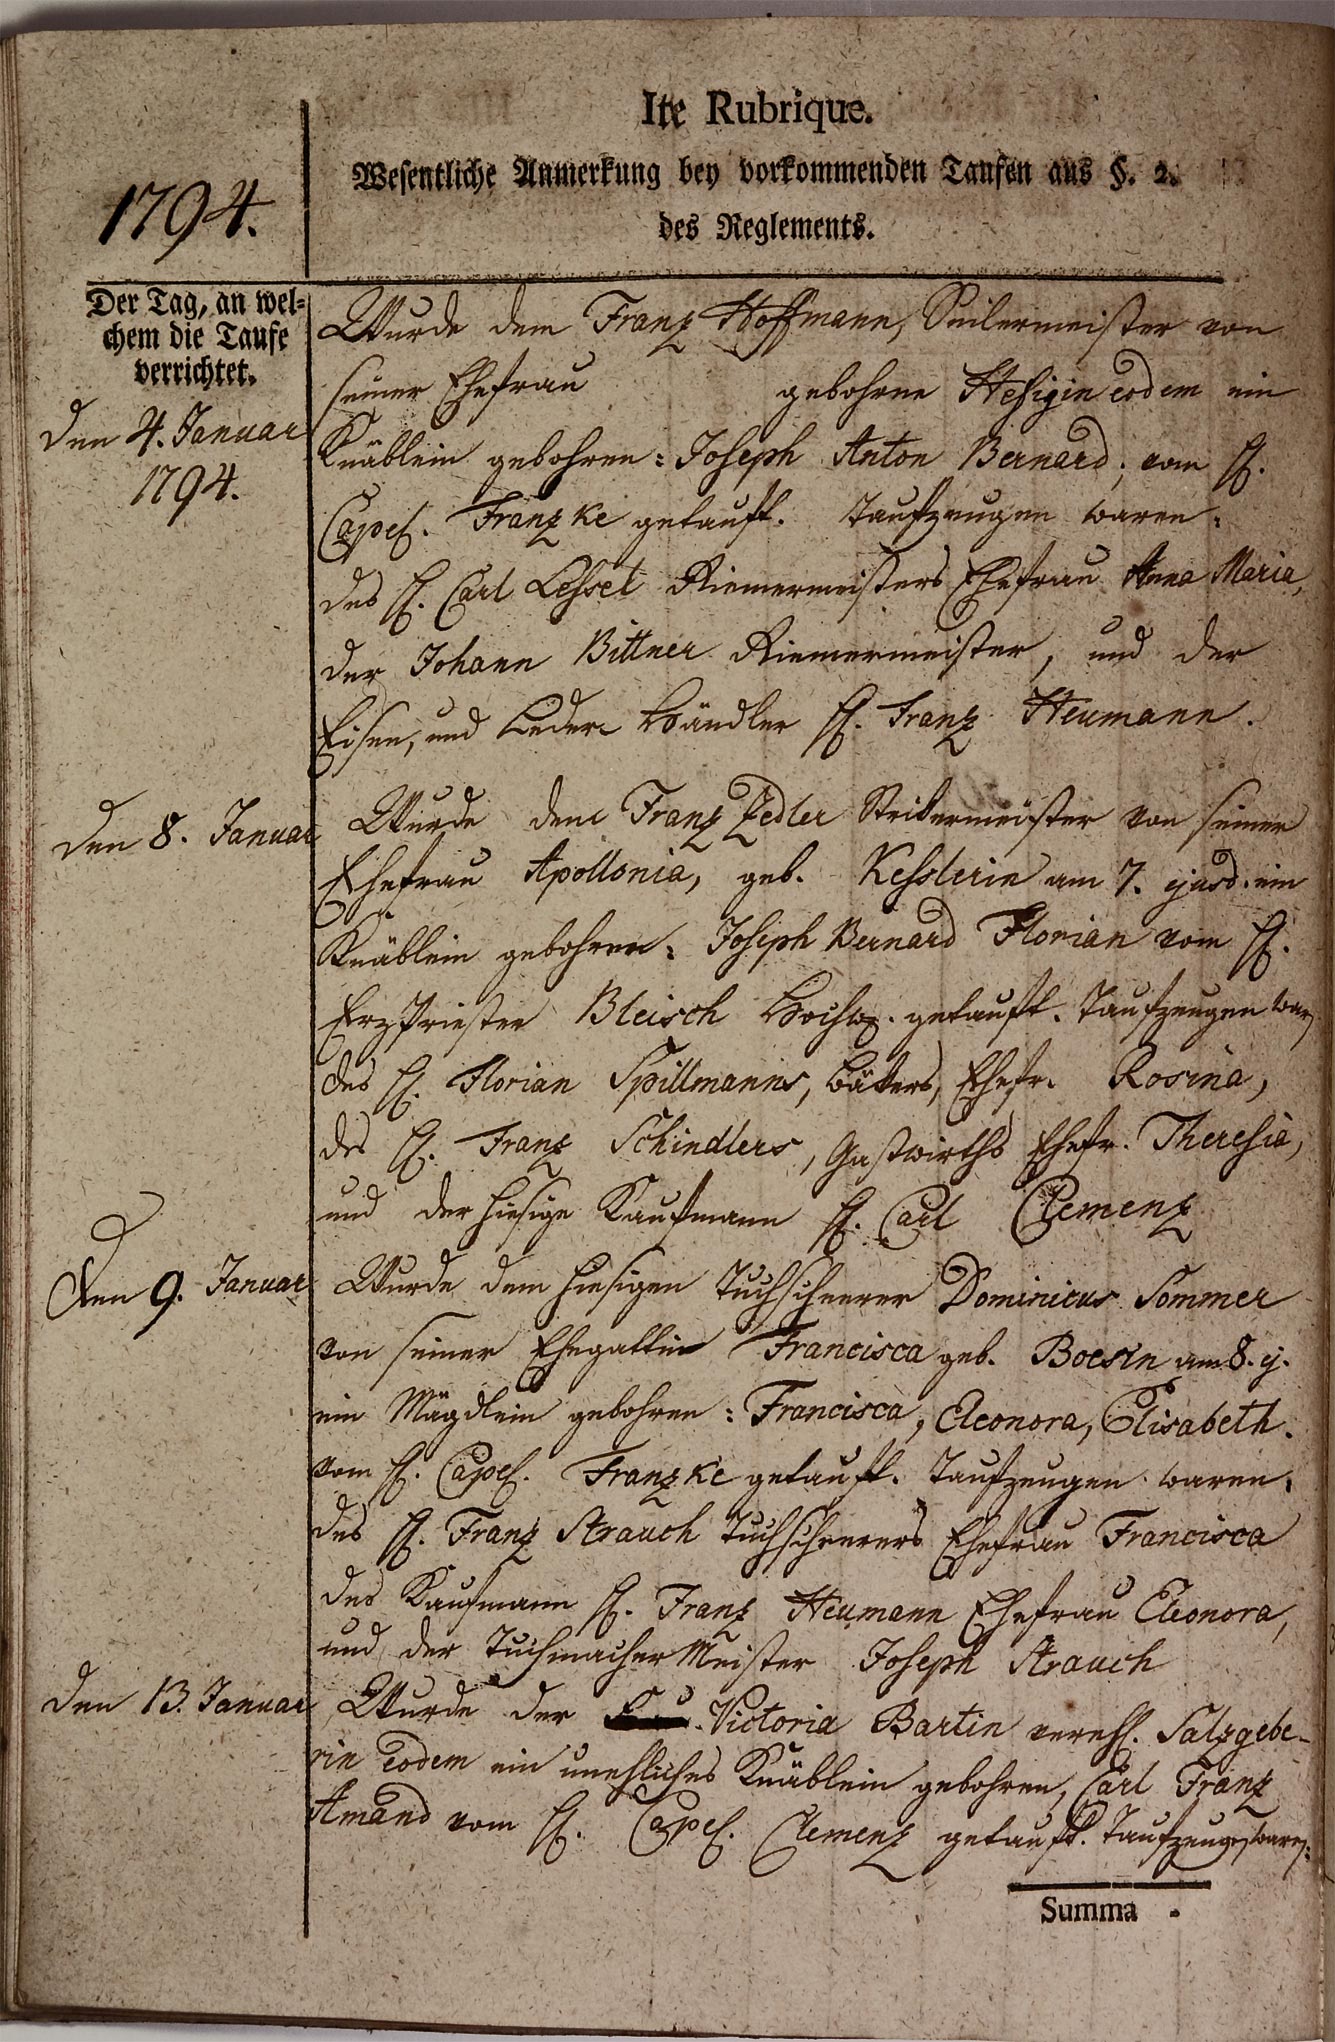 Kirchenbuch 1793 Seite 18